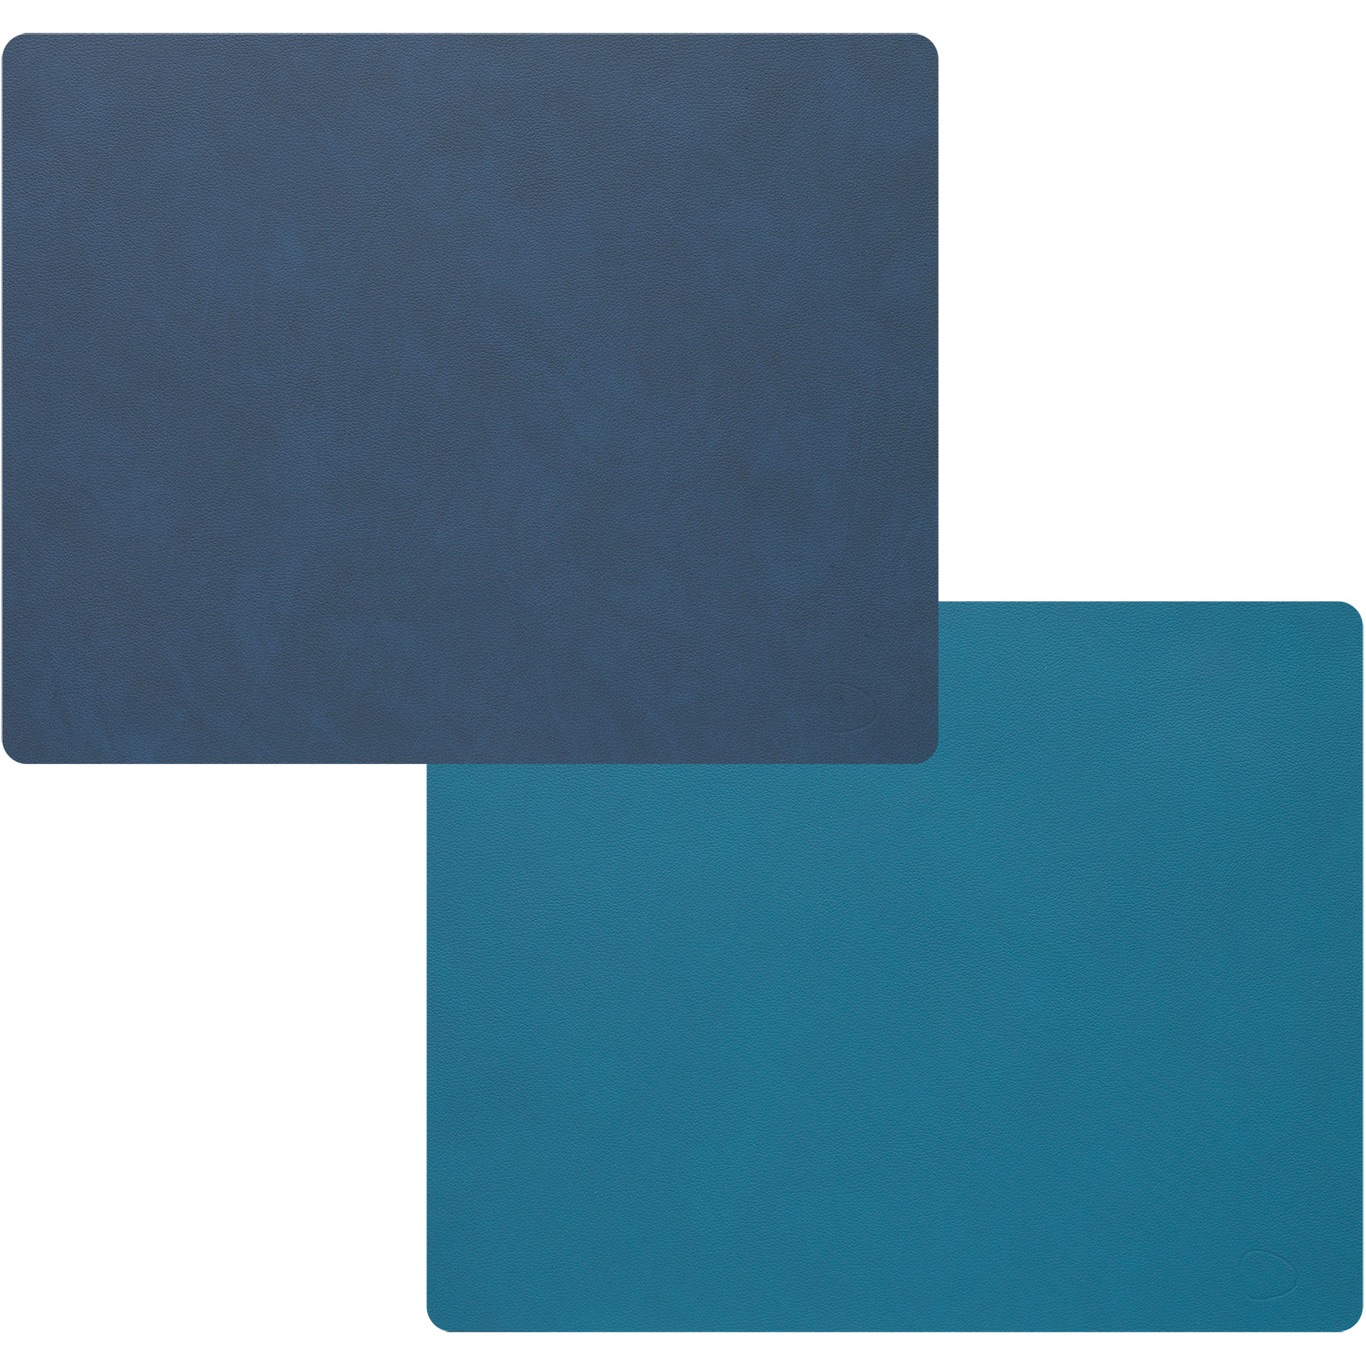 Square L Bordstablett Double, 35x45 cm, Petrol/Midnight Blue